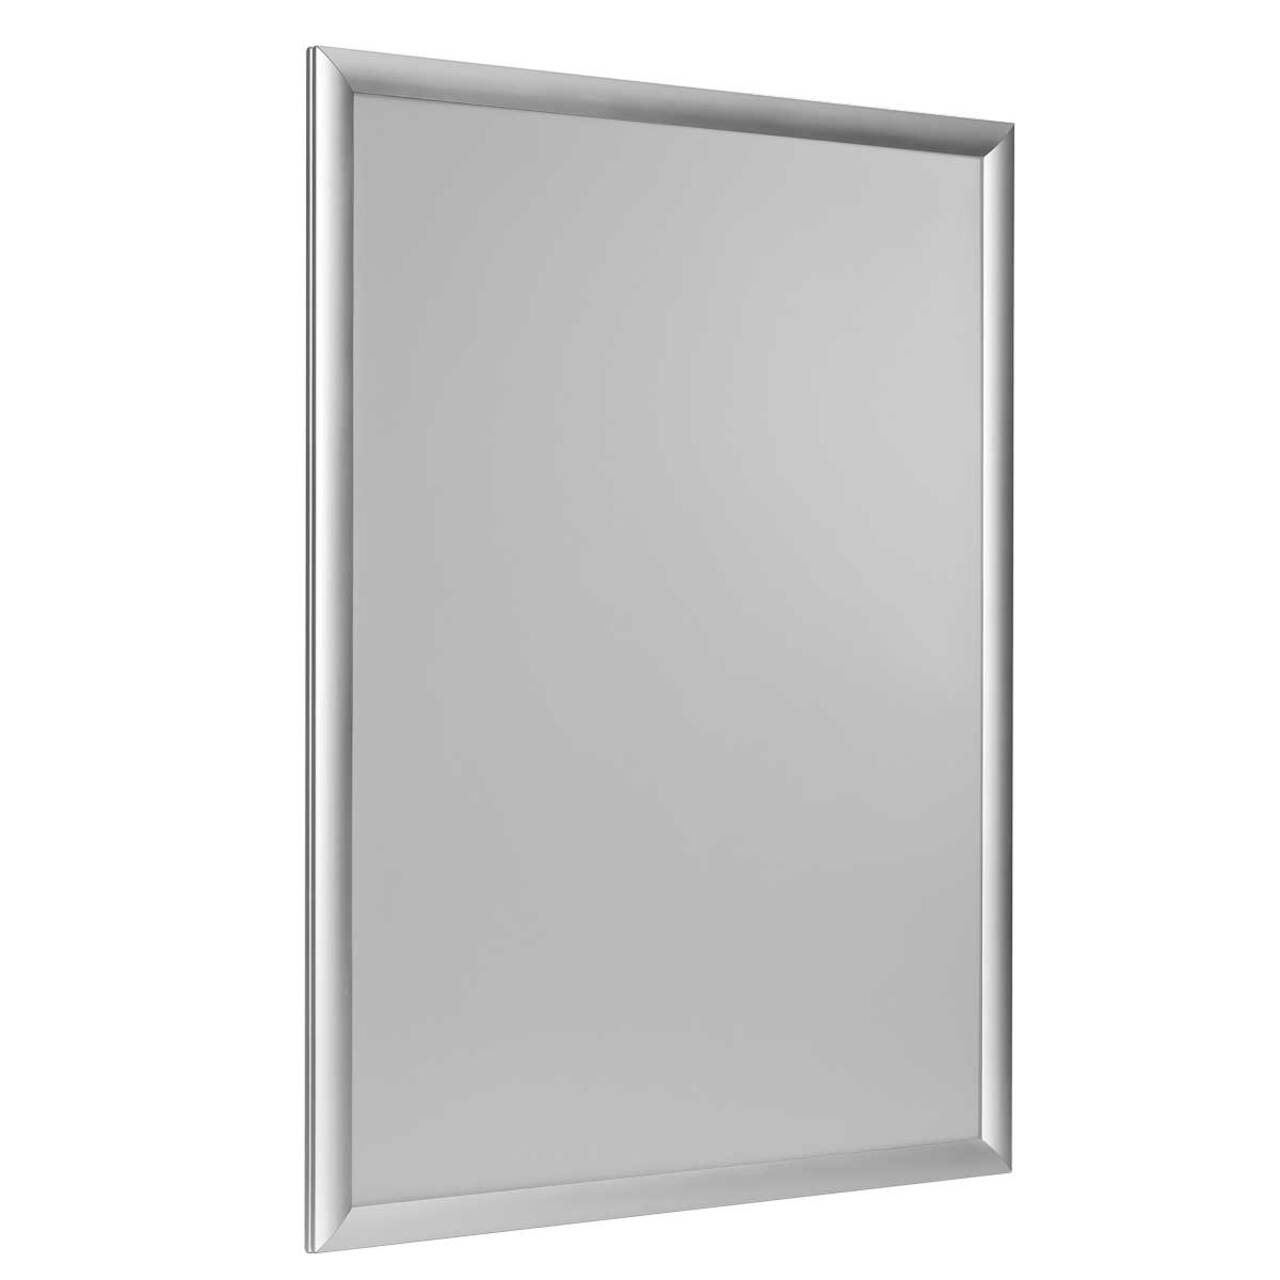 Window Frame 25, ramă click din aluminiu pentru ferestre B1 - 700 x 1000 mm  JJ DISPLAYS